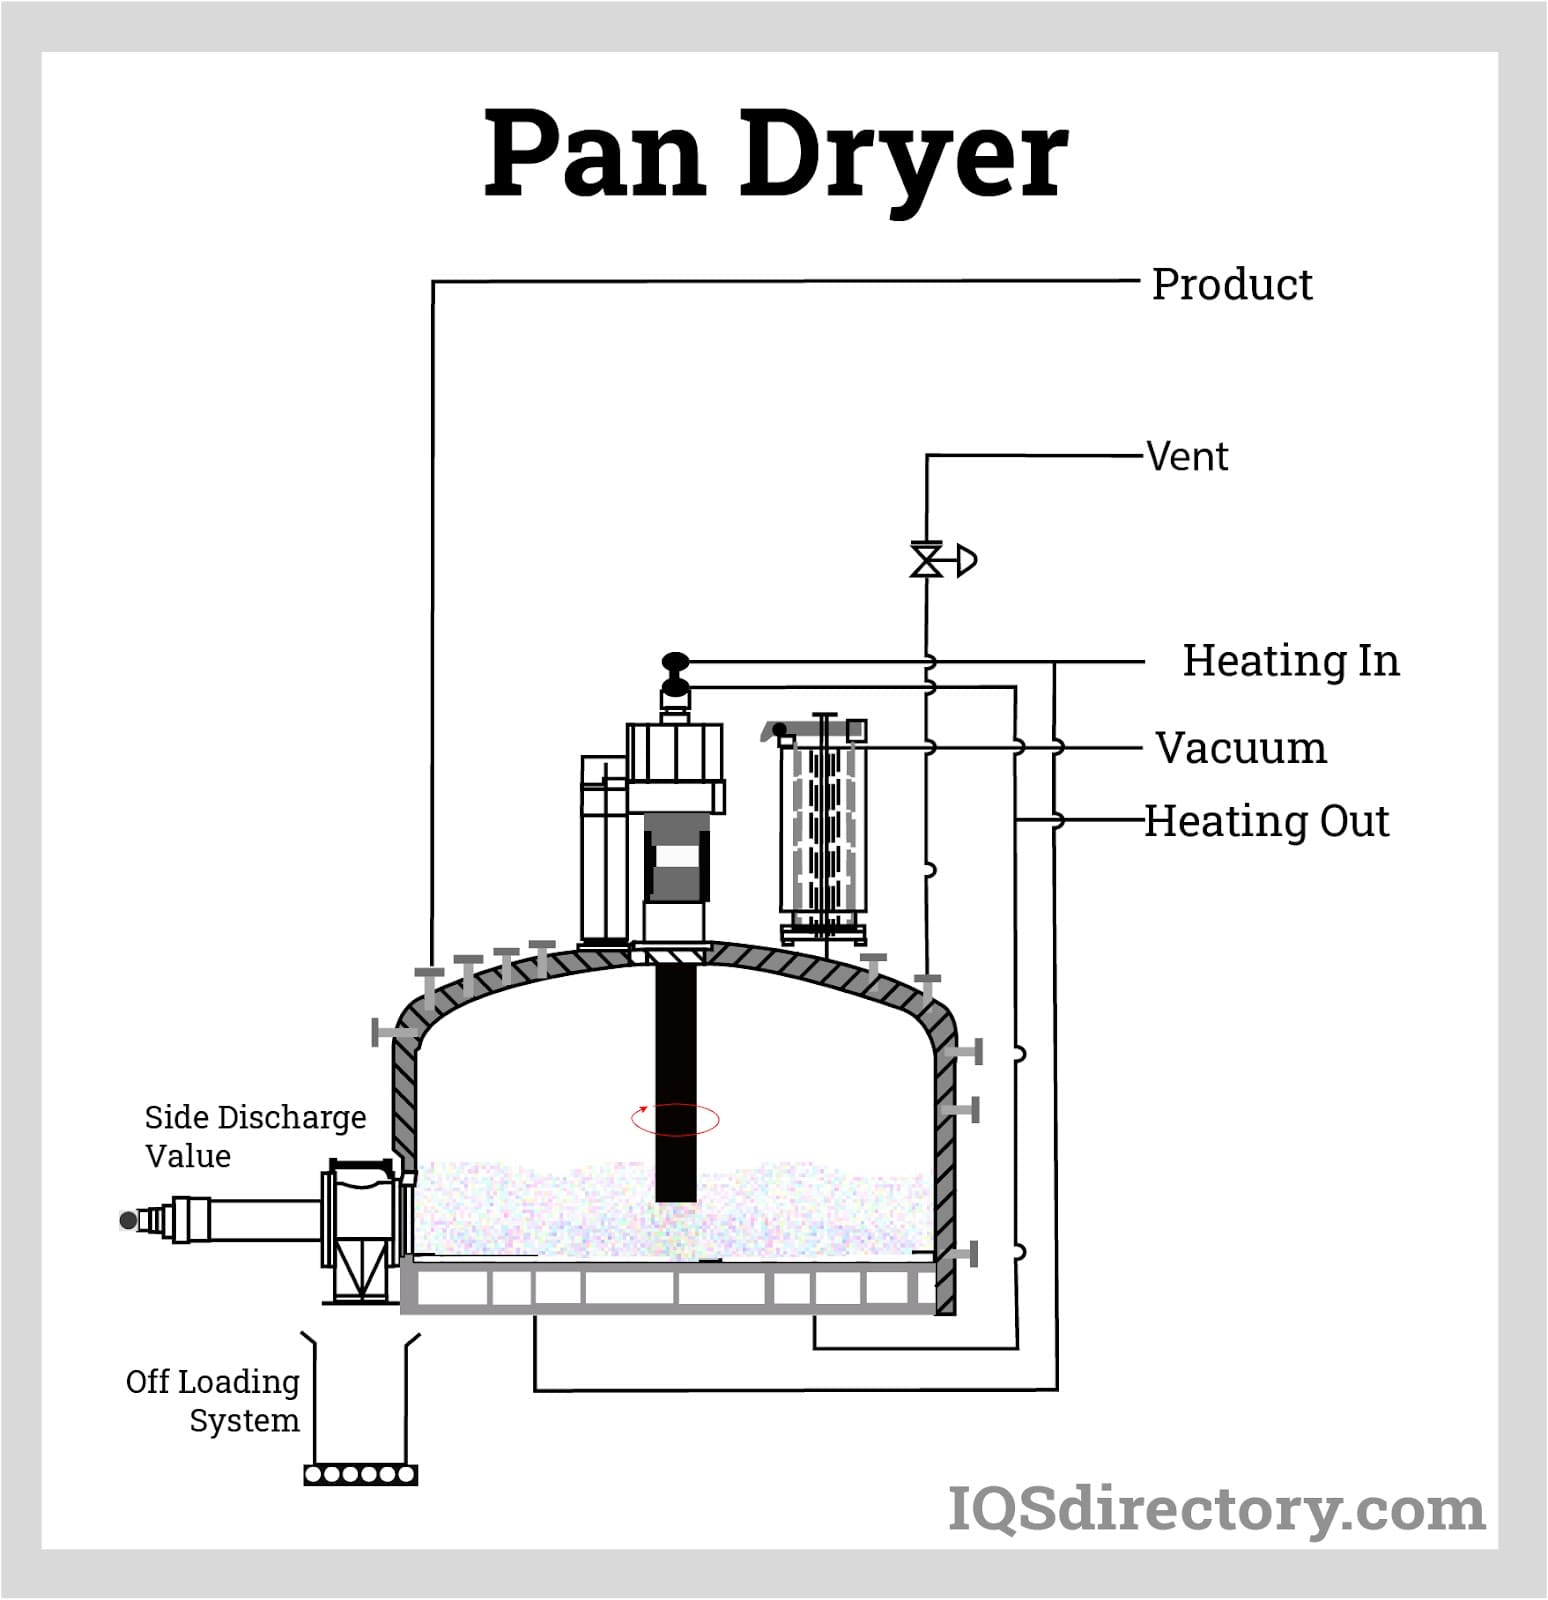 Pan Dryer